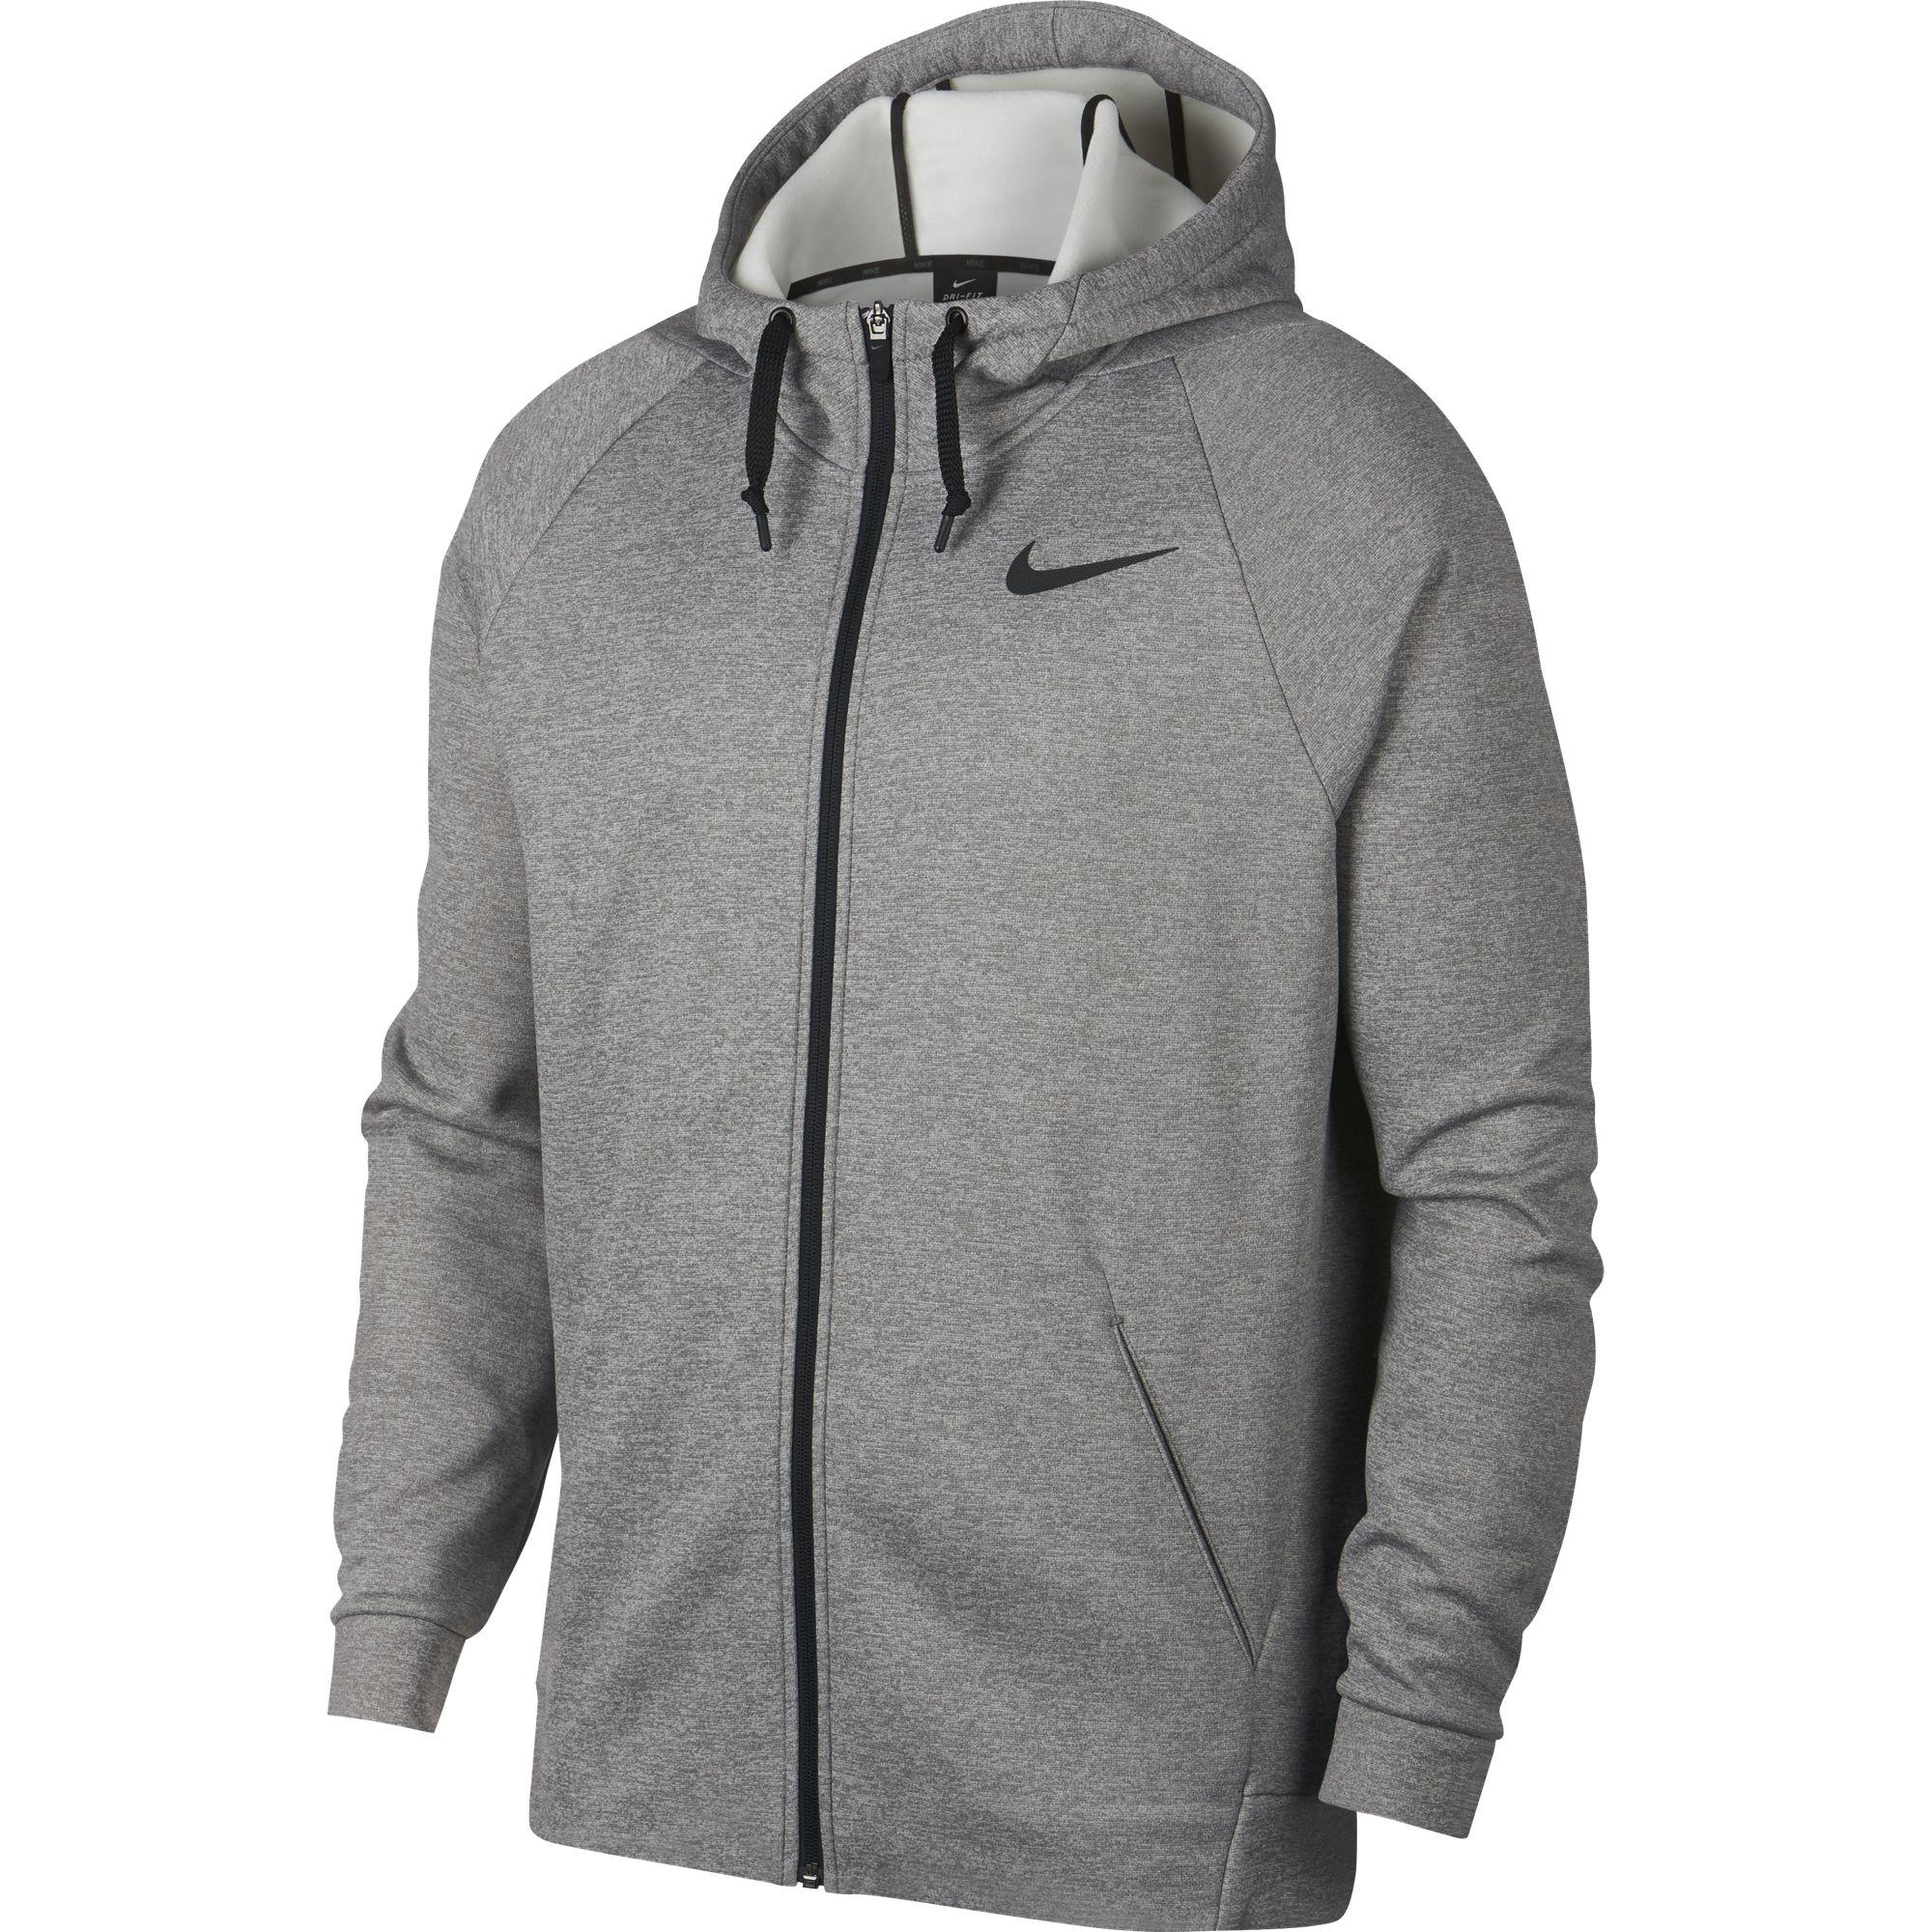 Nike Mens Therma Full Zip Hoodie - Dark Grey/Black - Tennisnuts.com